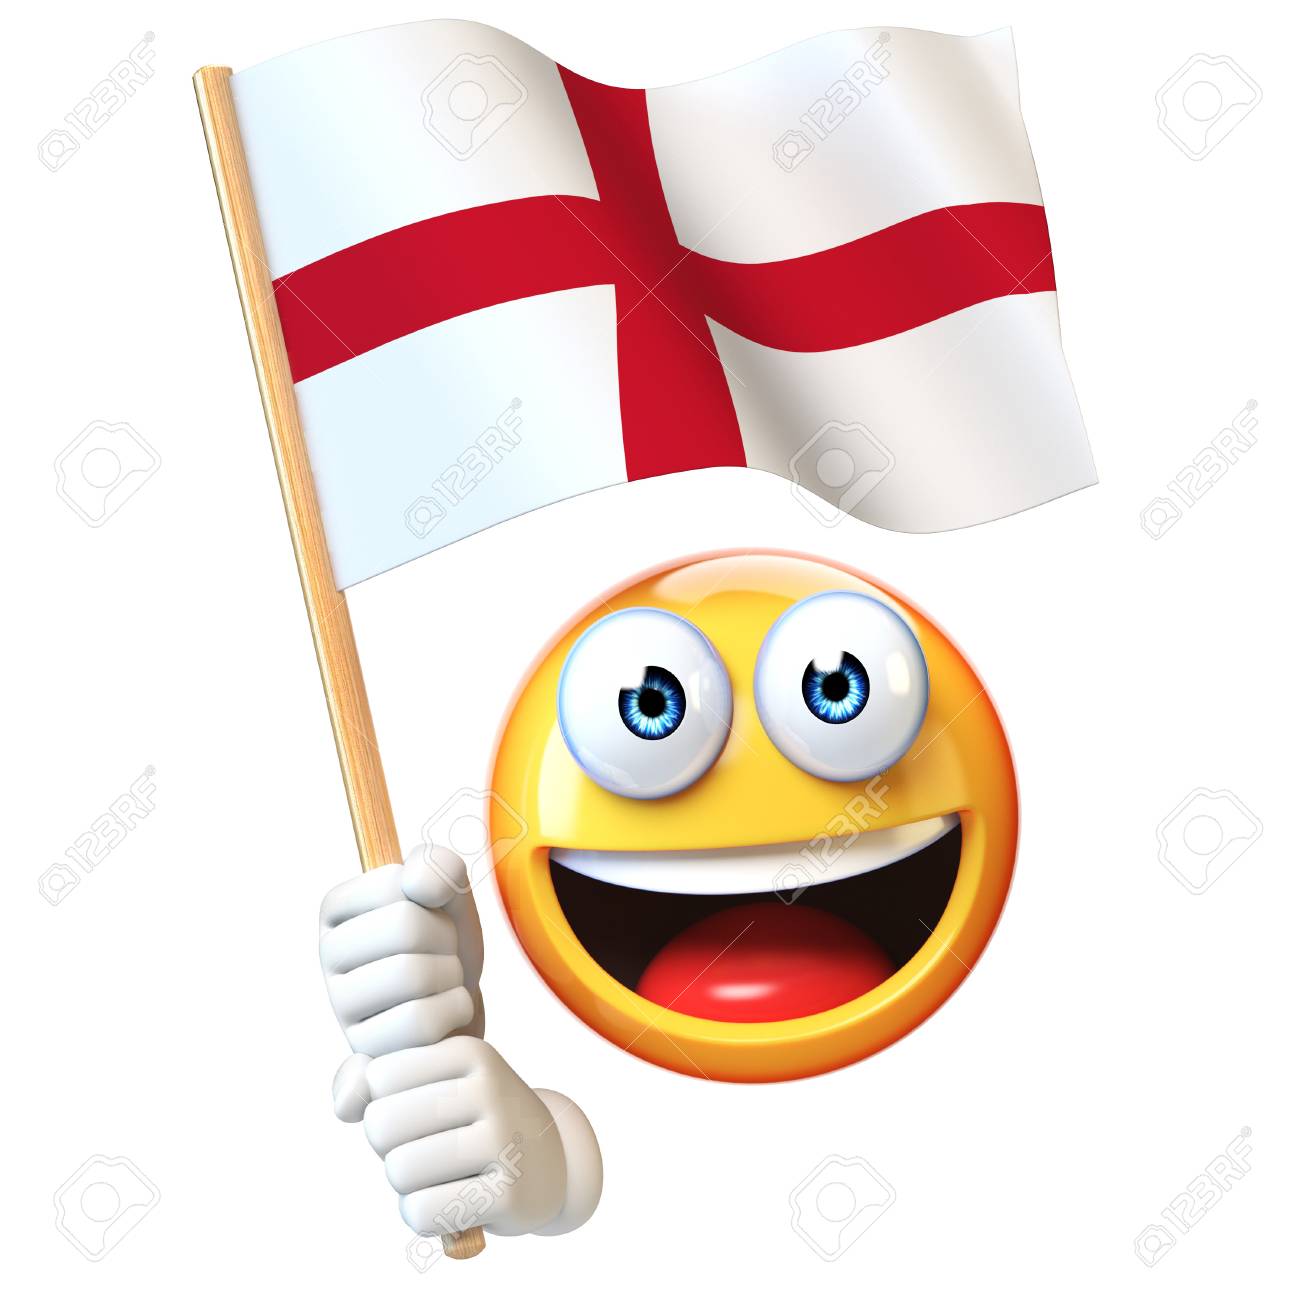 94011521-emoji-holding-england-flag-emoticon-waving-national-flag-of-england-3d-rendering.jpg